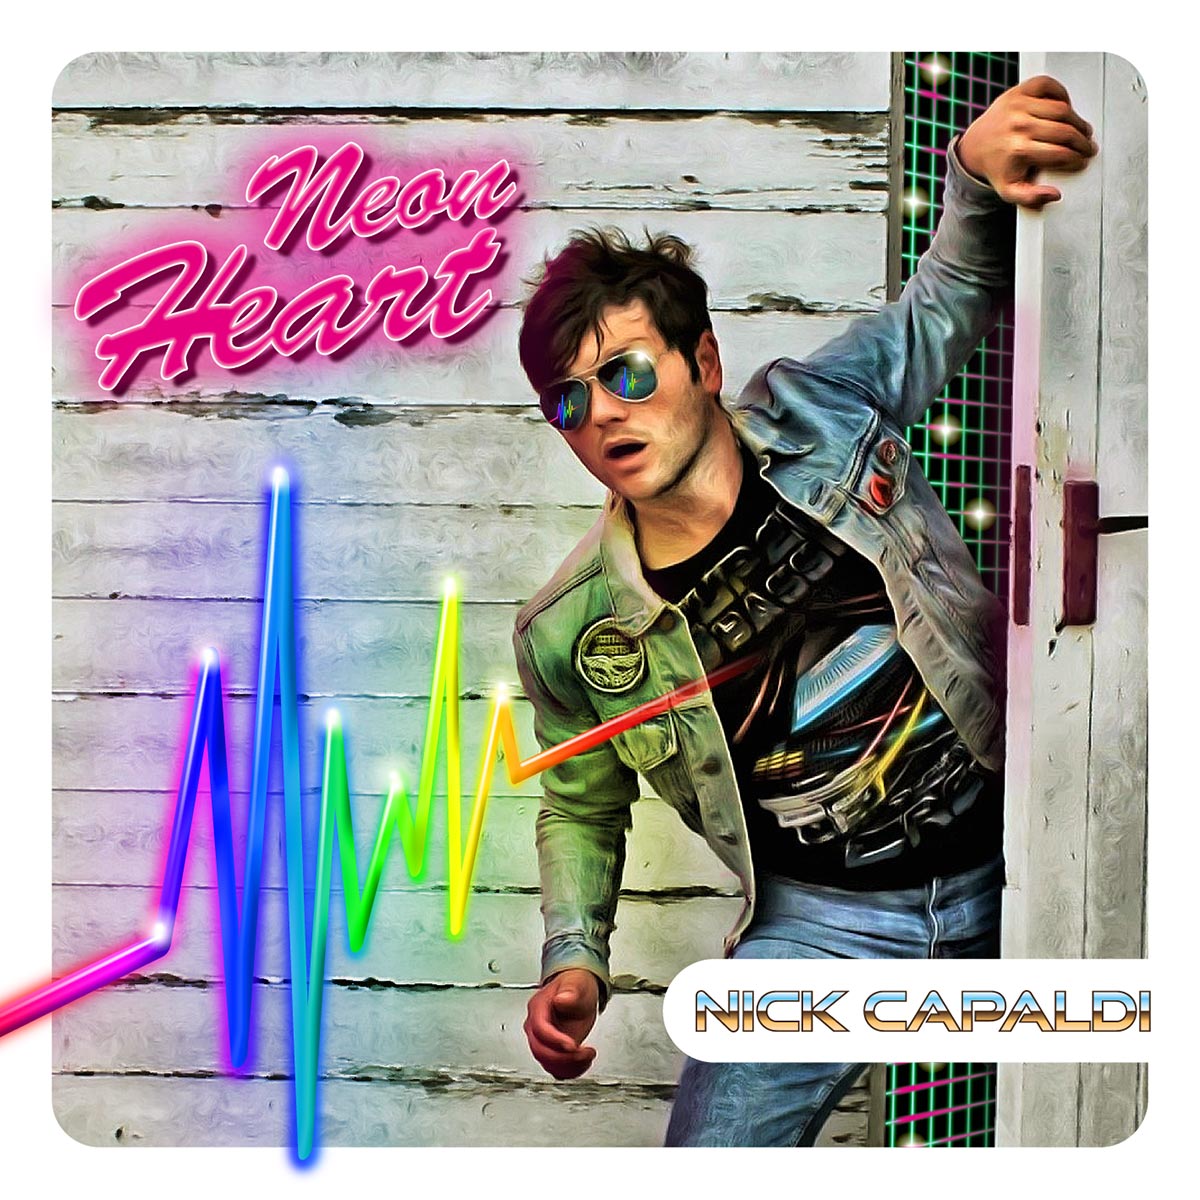 Nick Capaldi Musician - Neon Heart CD cover